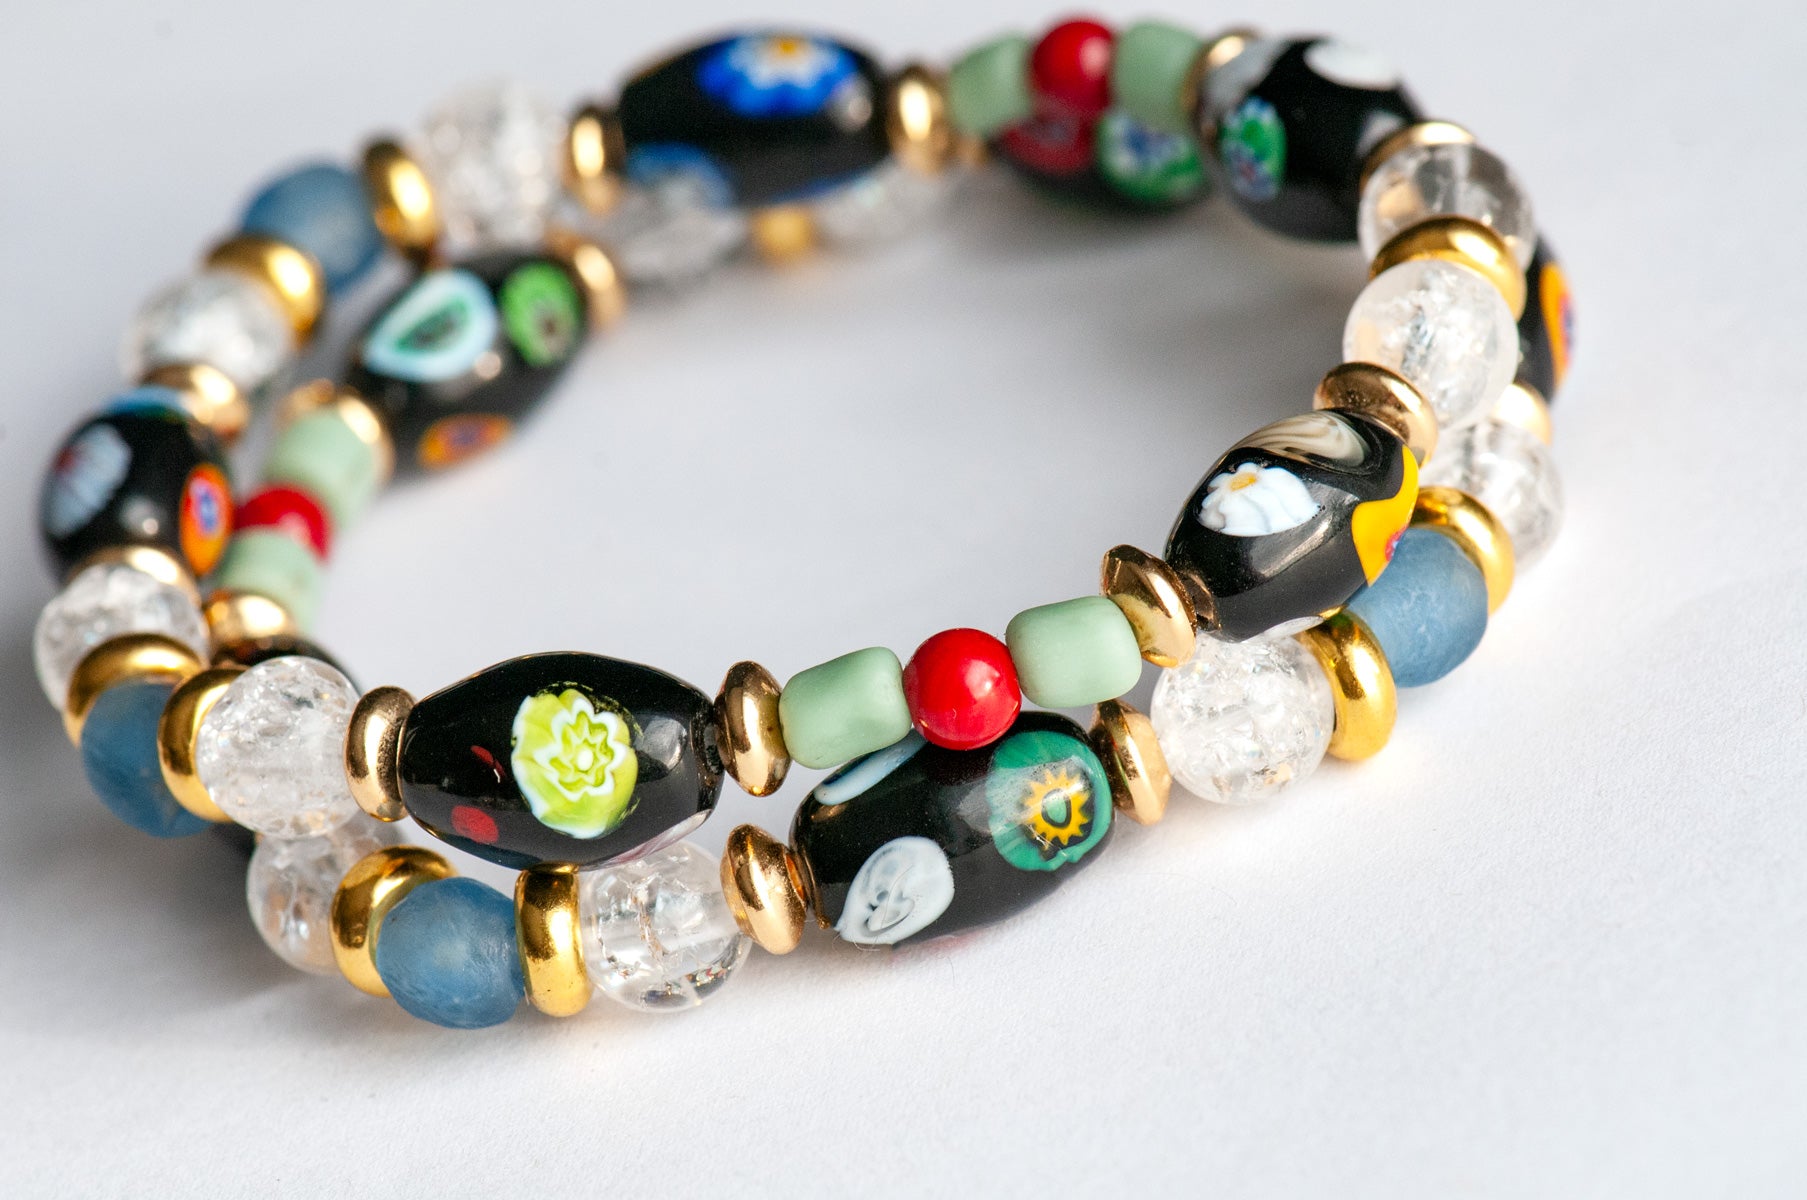 Voyage to Venice - Handmade bracelet set with Kyanite, Quartz, Garnet, and recycled glass beads